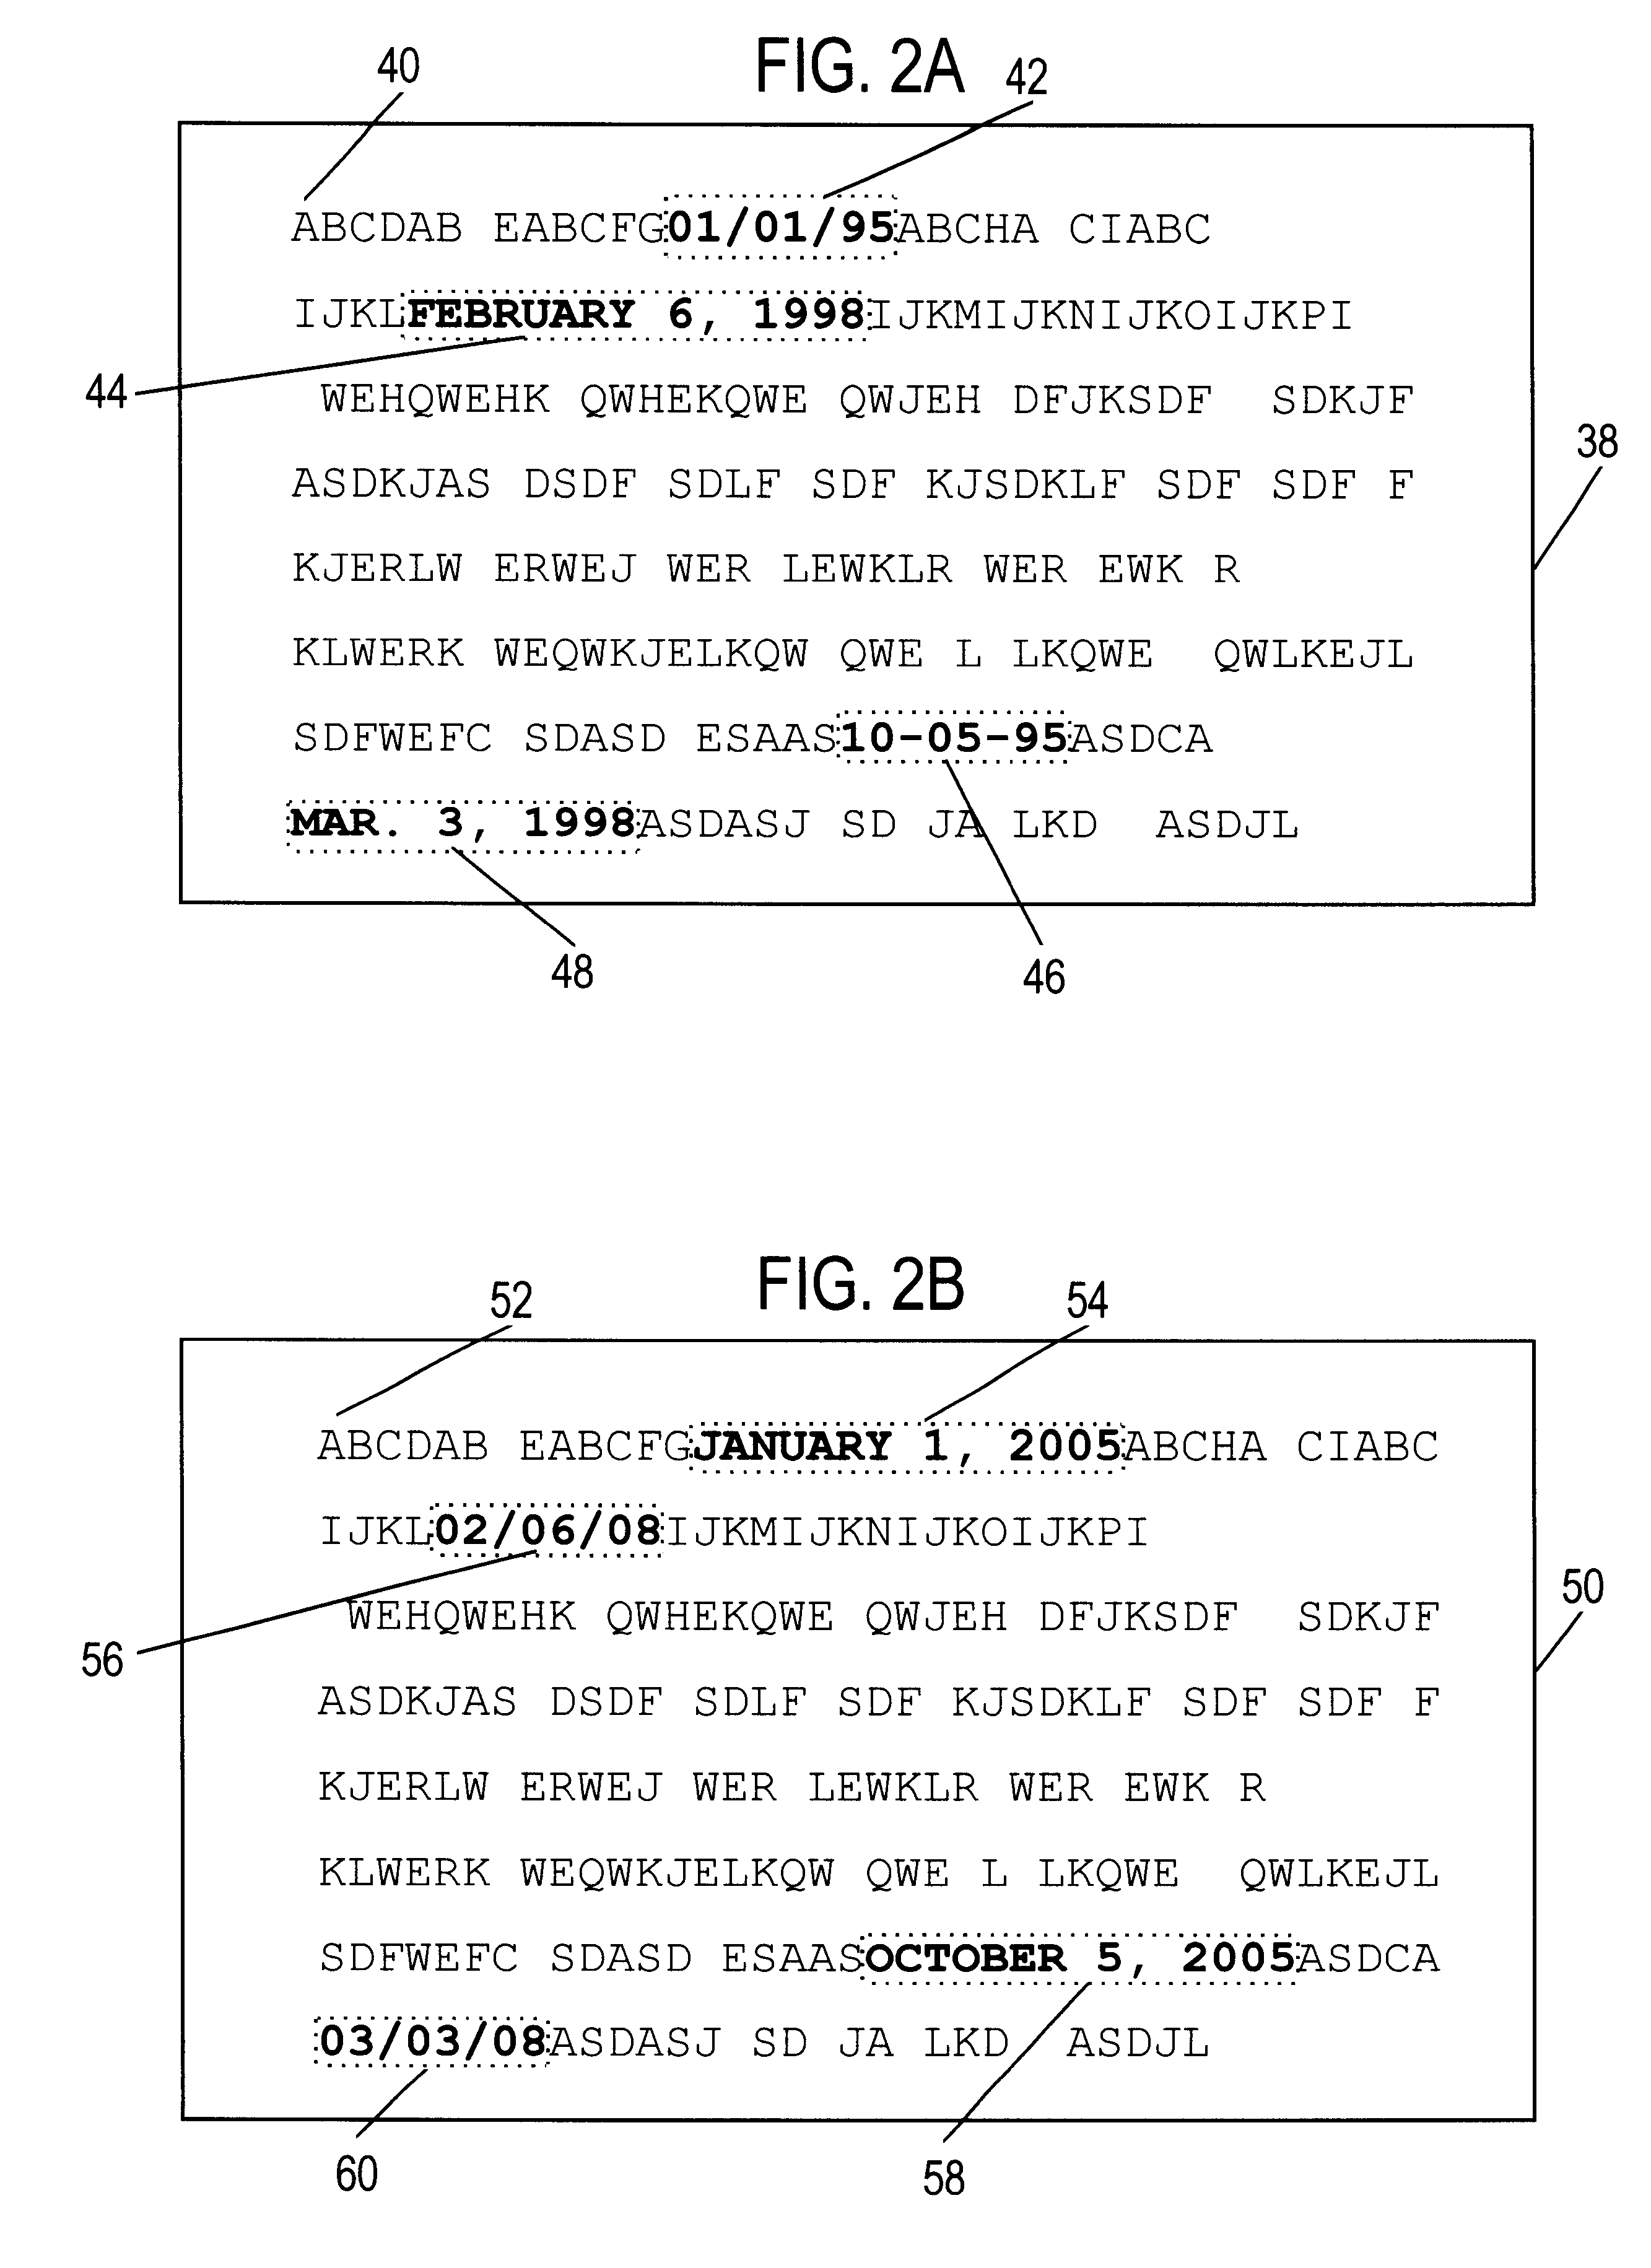 Computer file comparison method